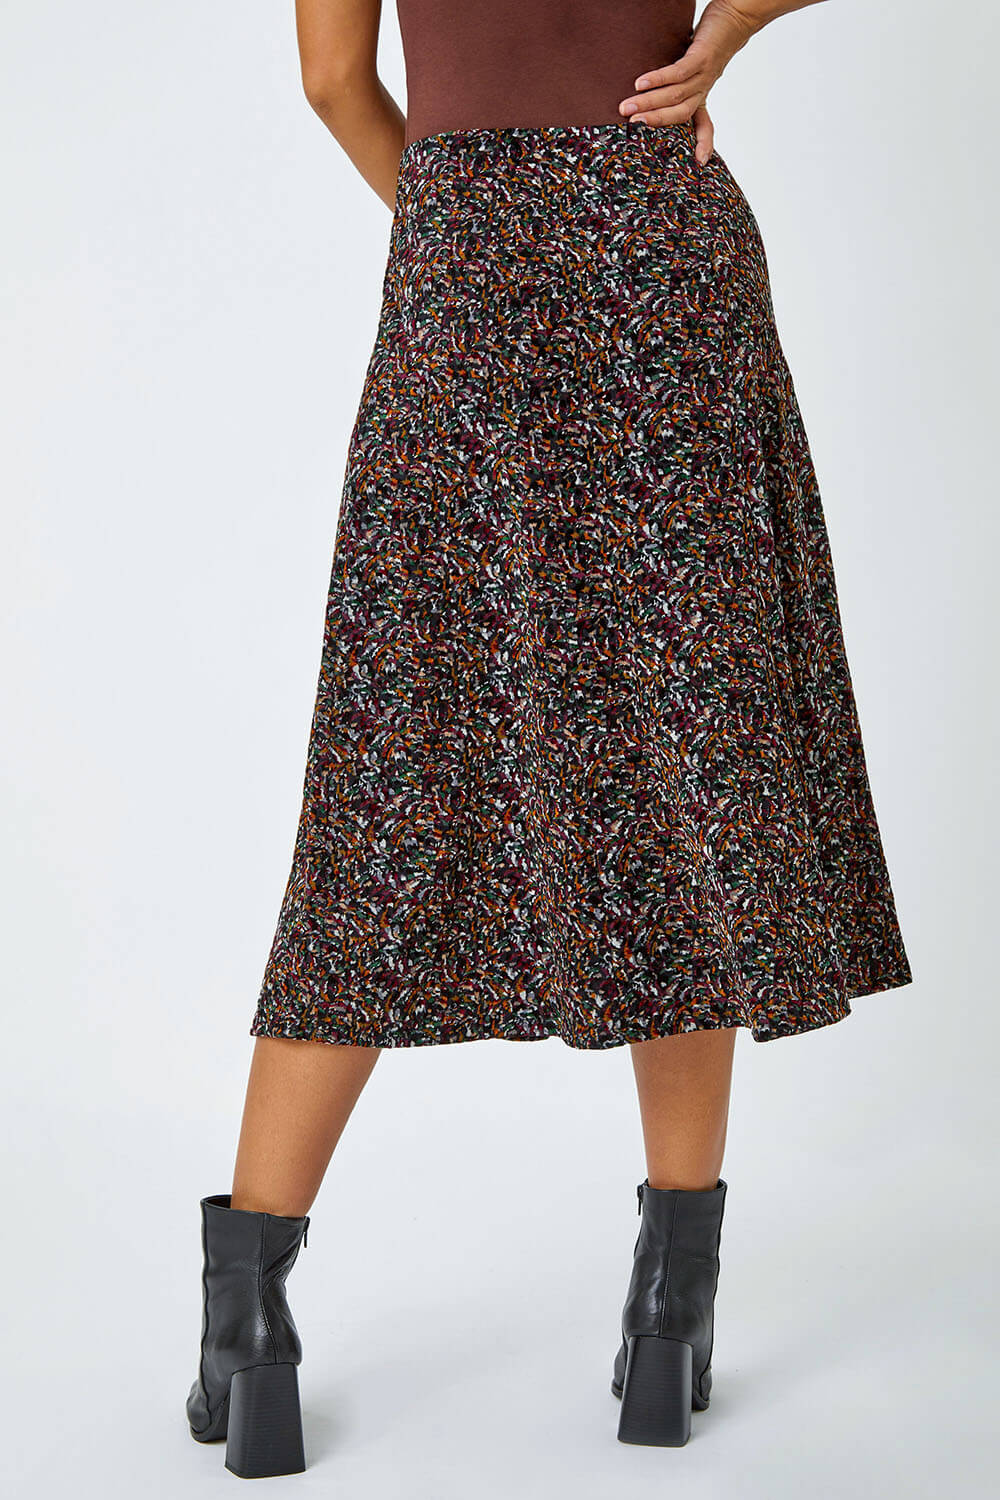 Multi Textured Abstract Print Stretch Skirt | Roman UK